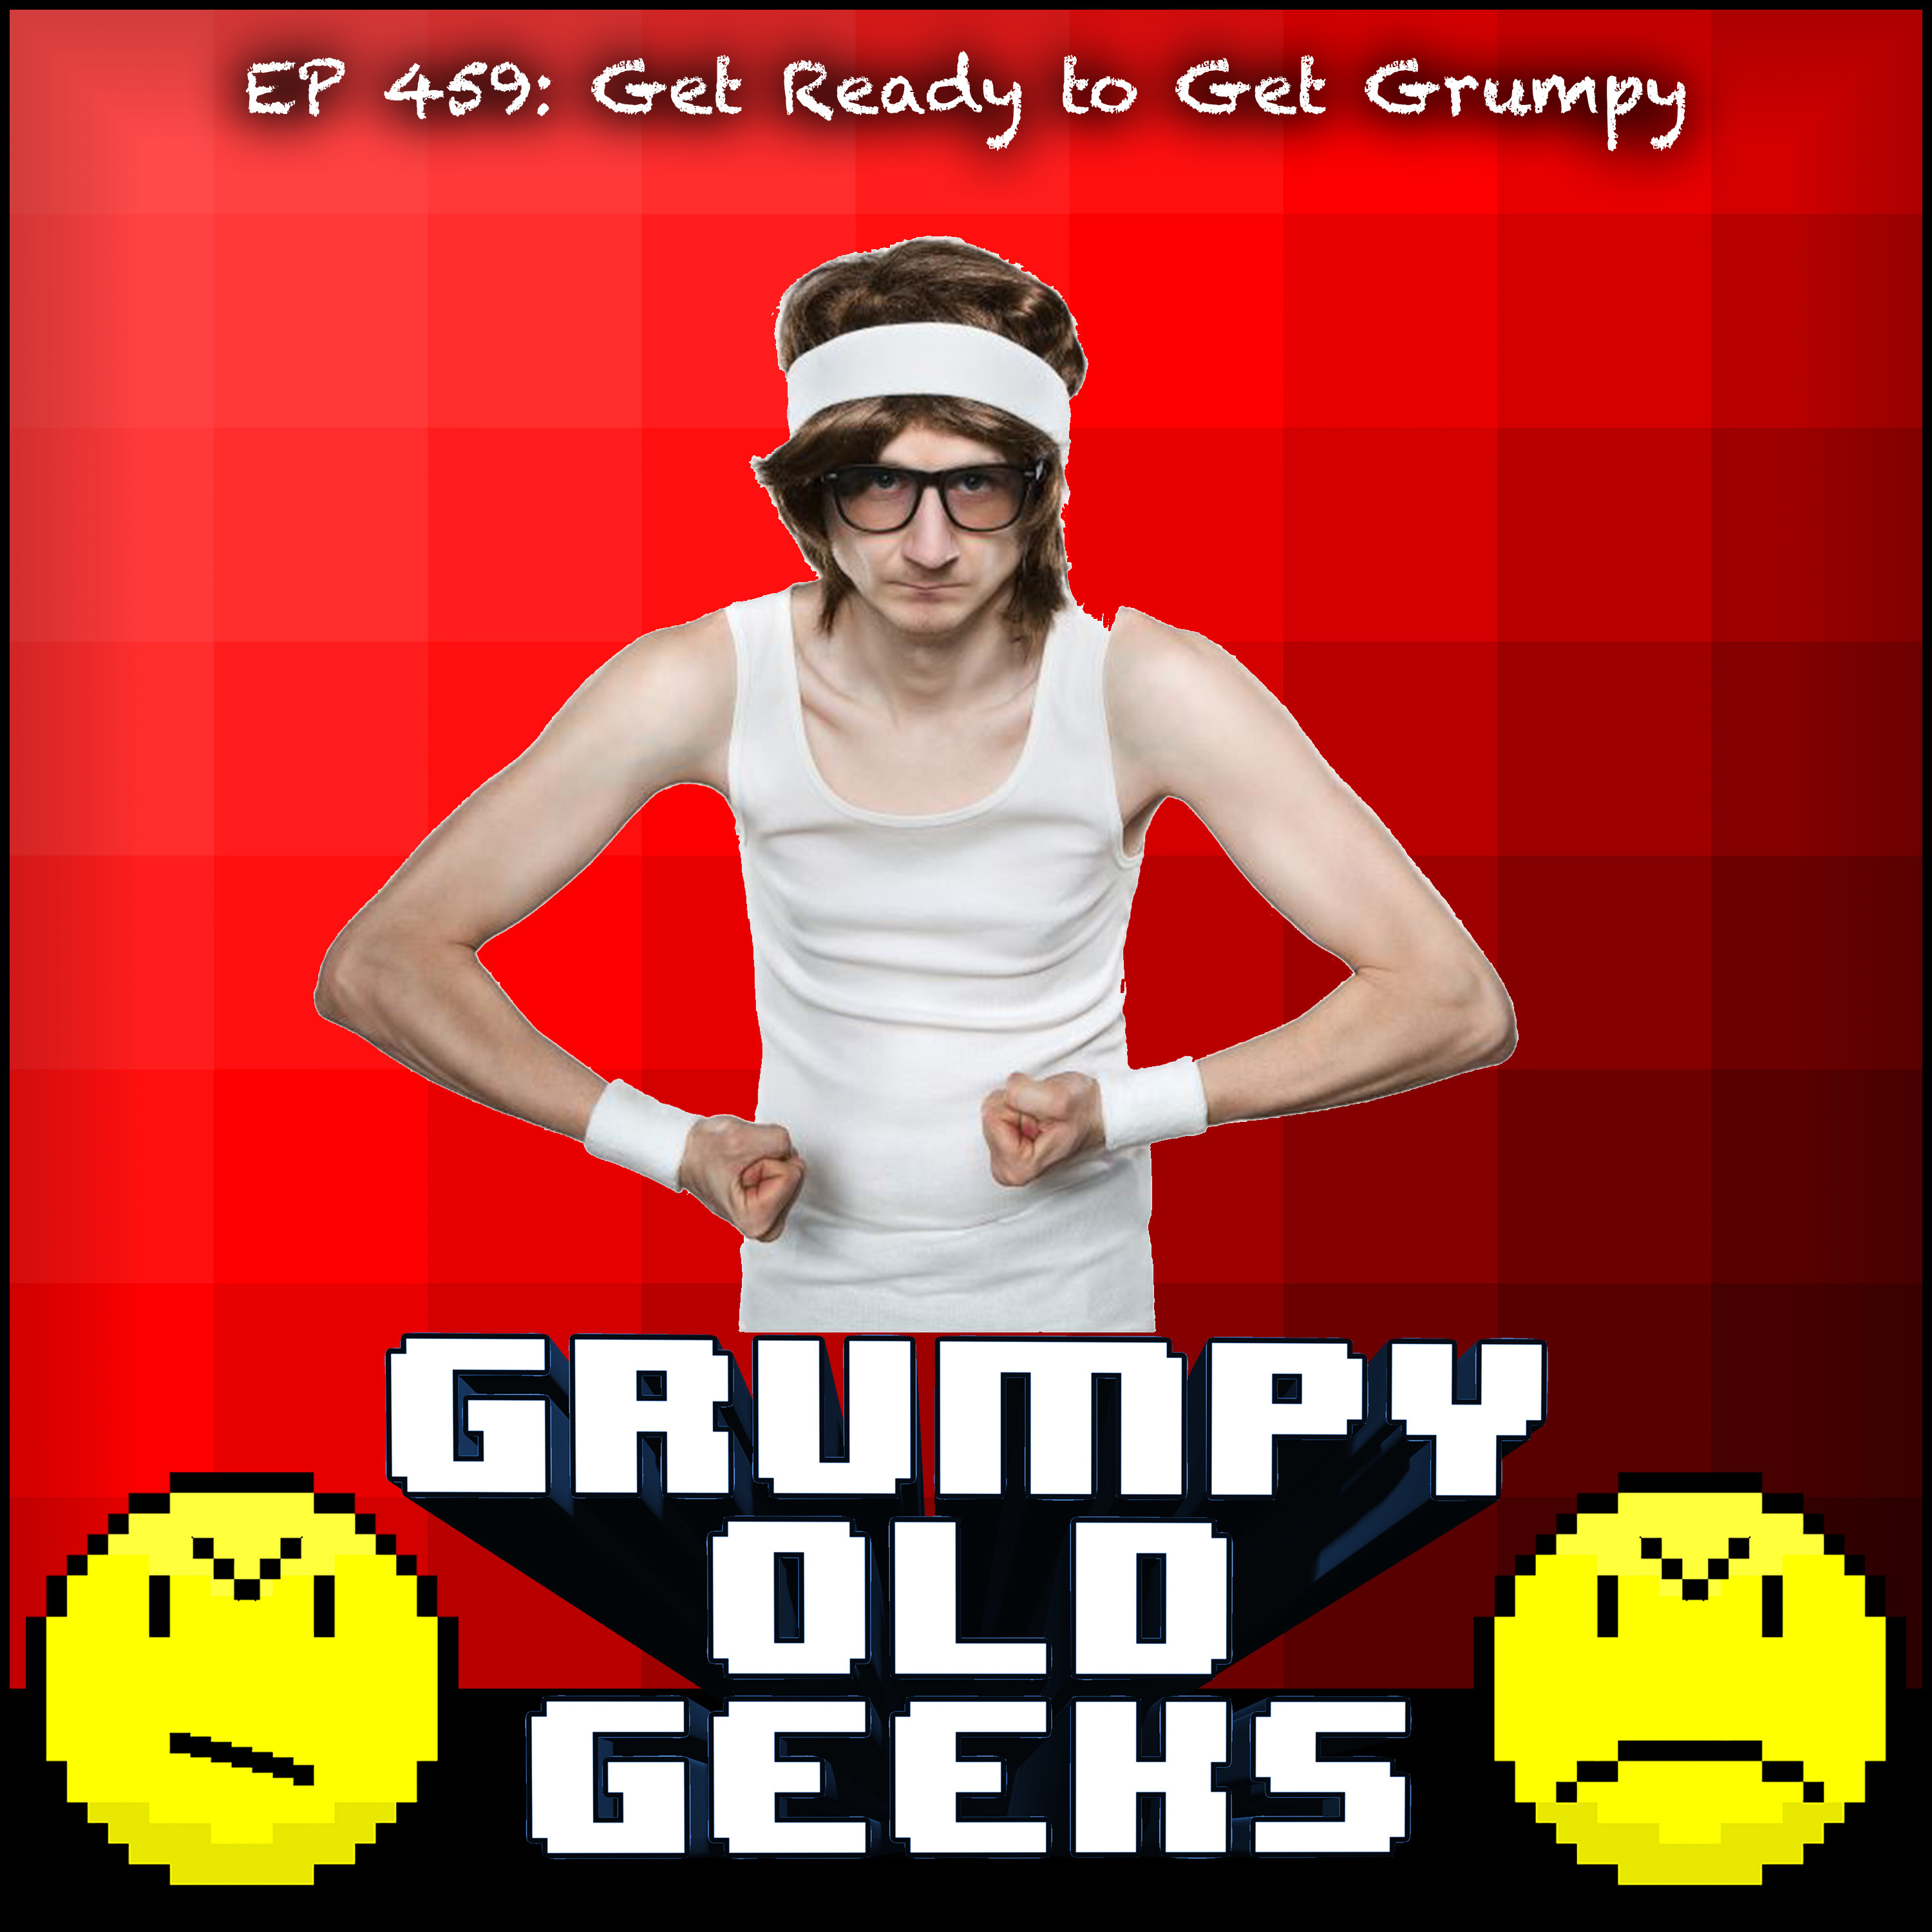 459: Get Ready to Get Grumpy! Image